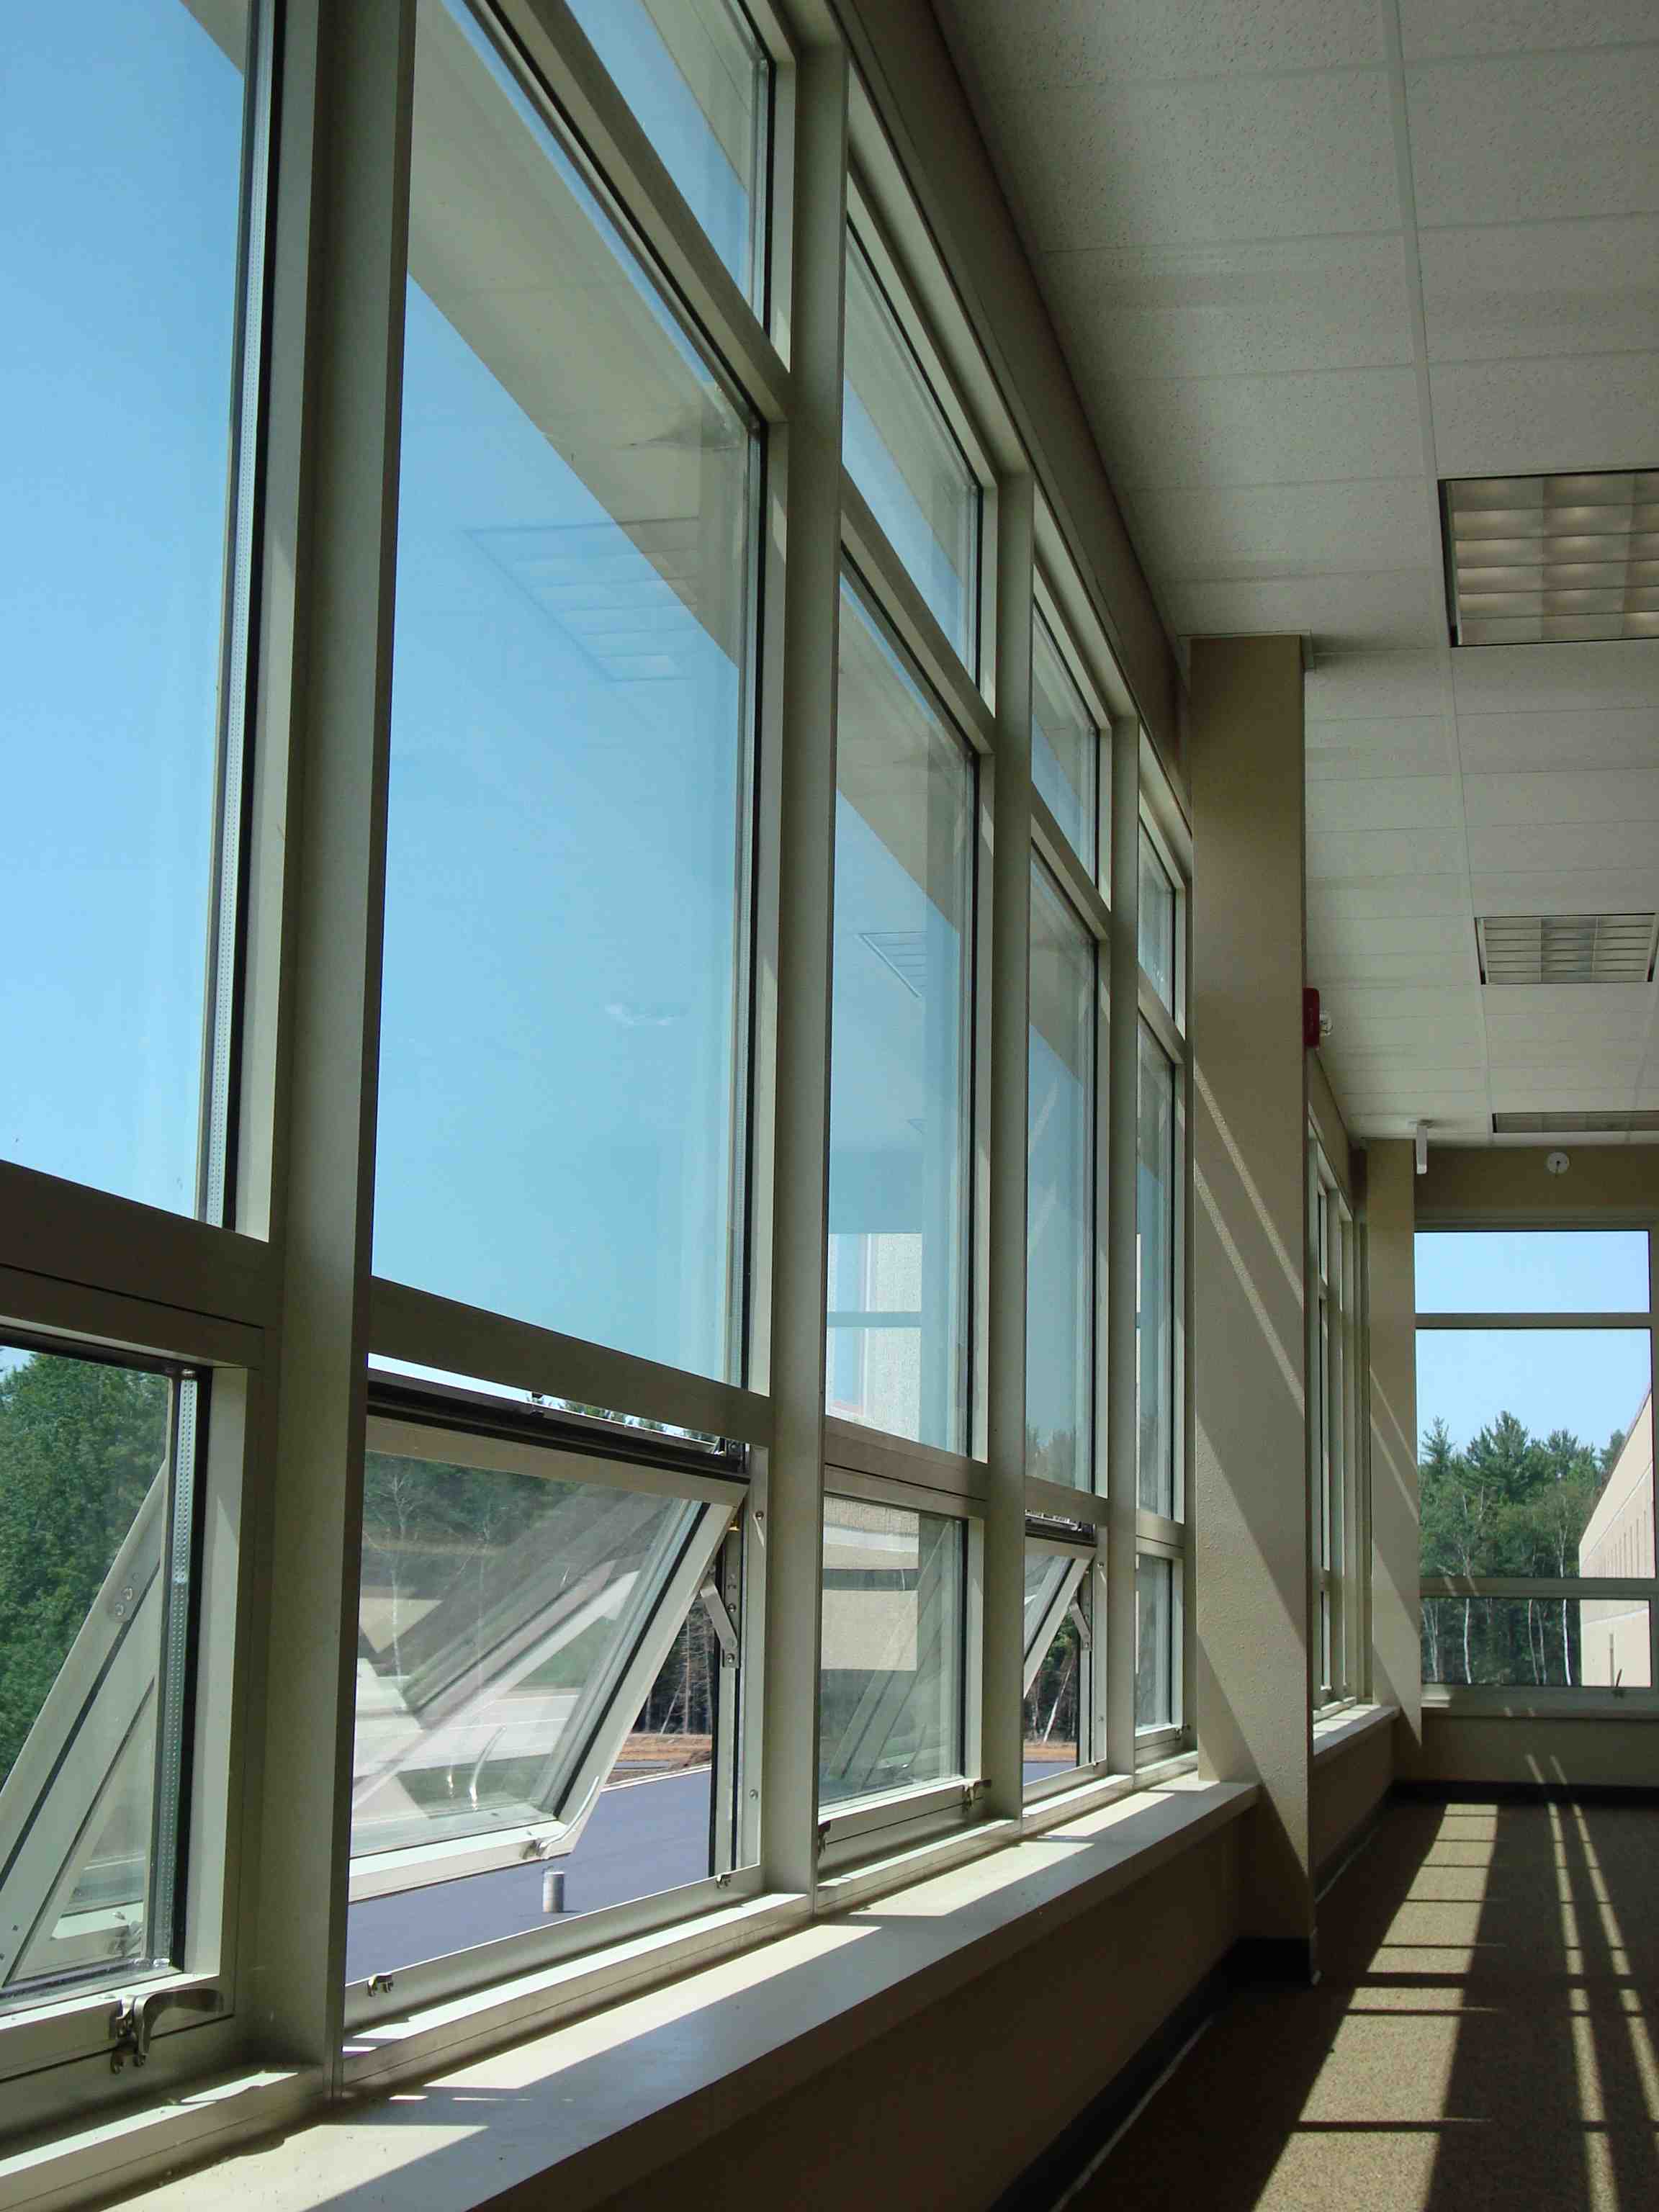 Operable windows for natural light, ventilation